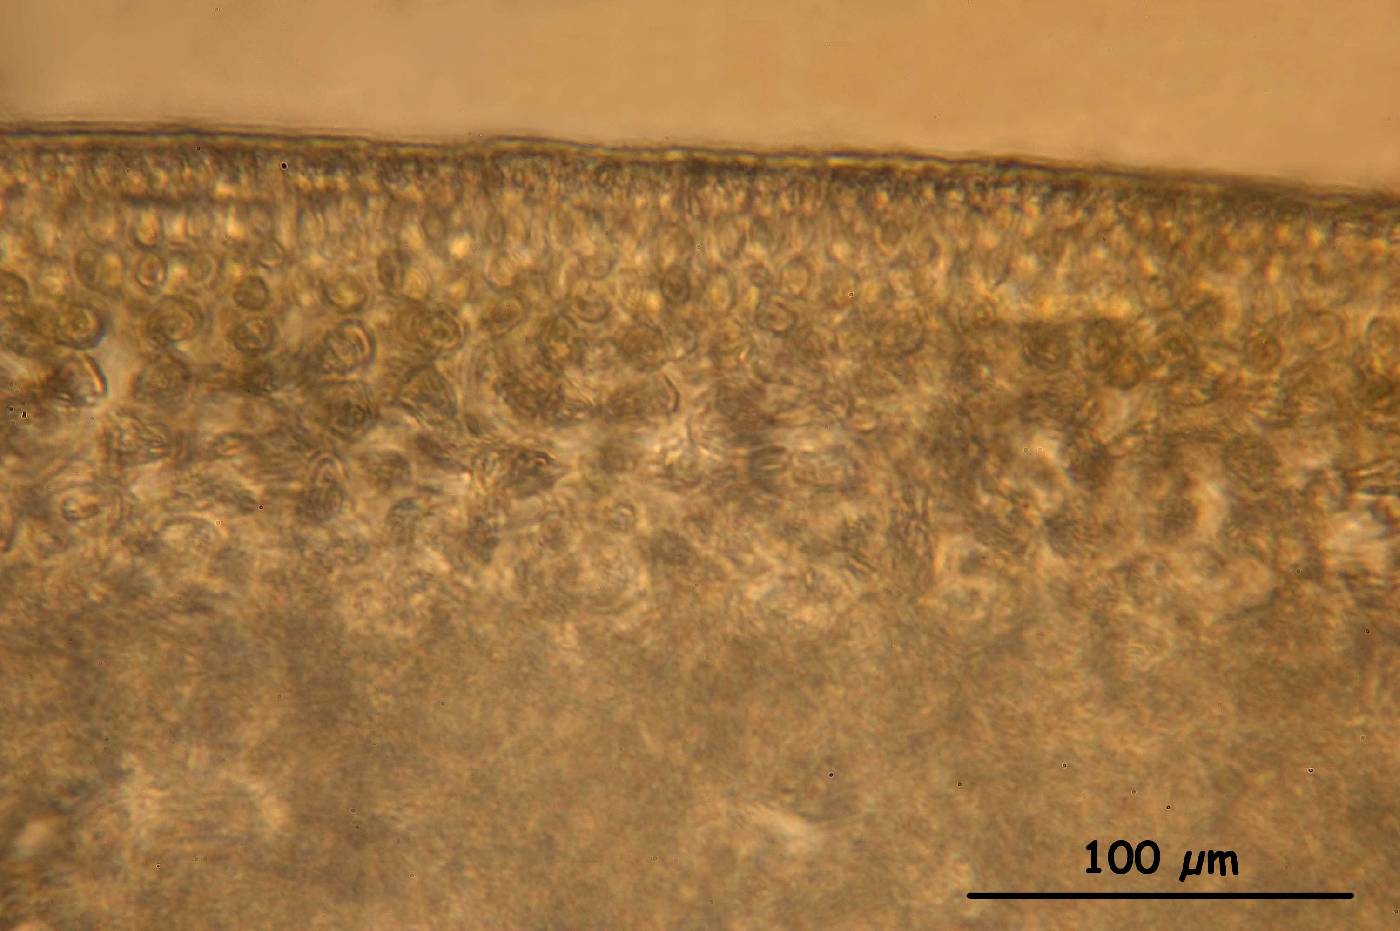 Ahnfeltiopsis image